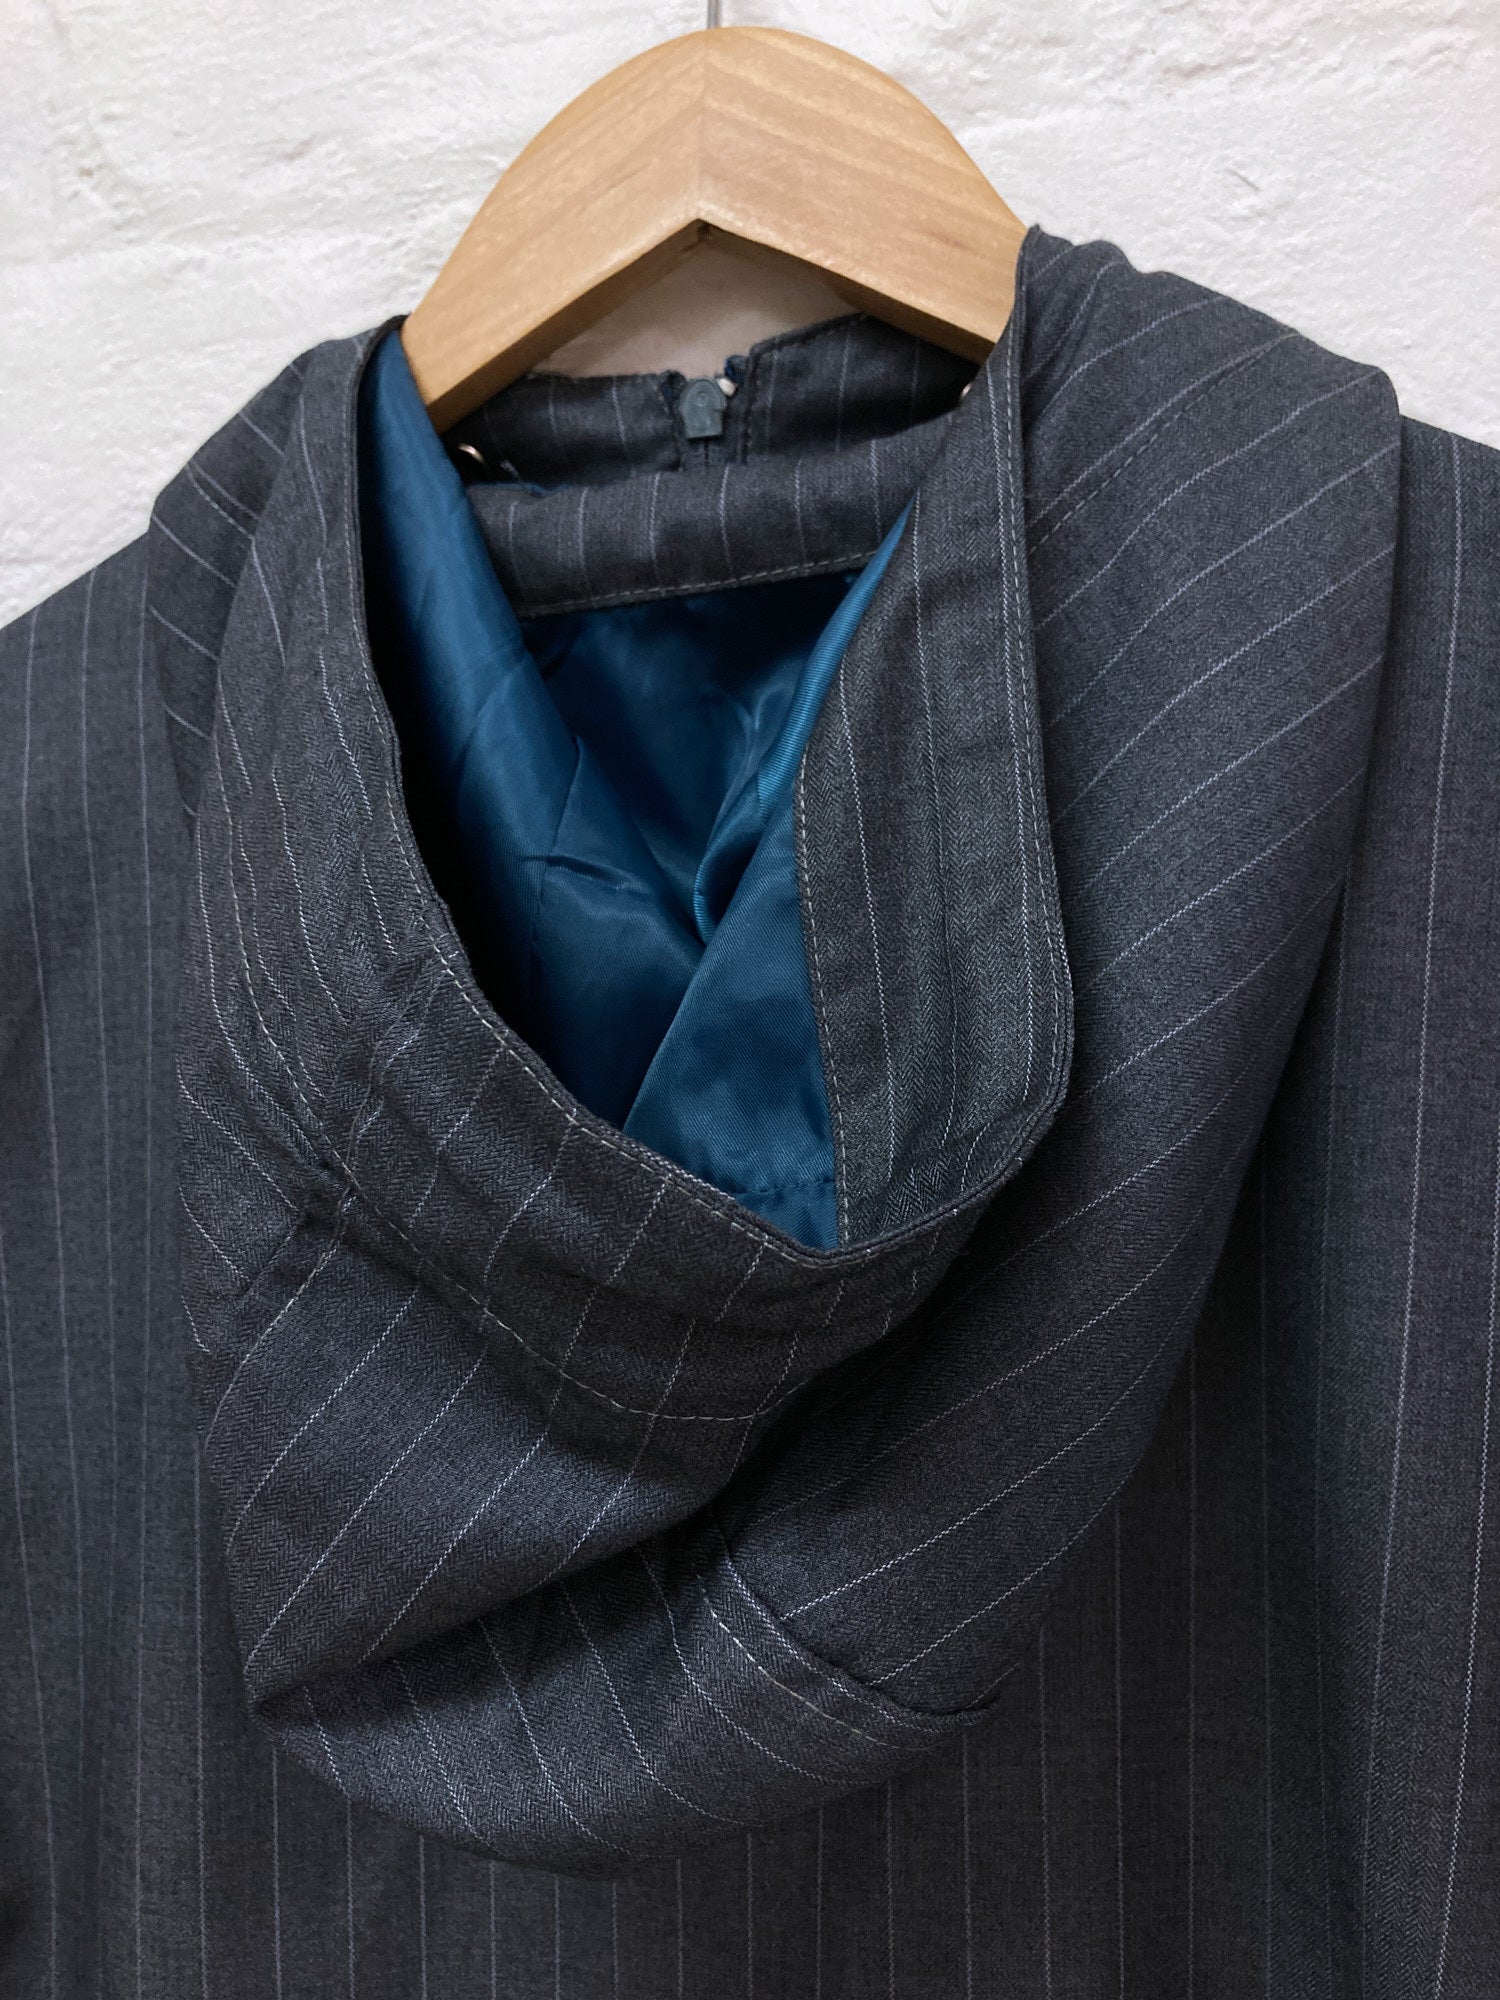 Junya Watanabe Comme des Garcons Man striped grey 4 pocket hooded jacket - L M S